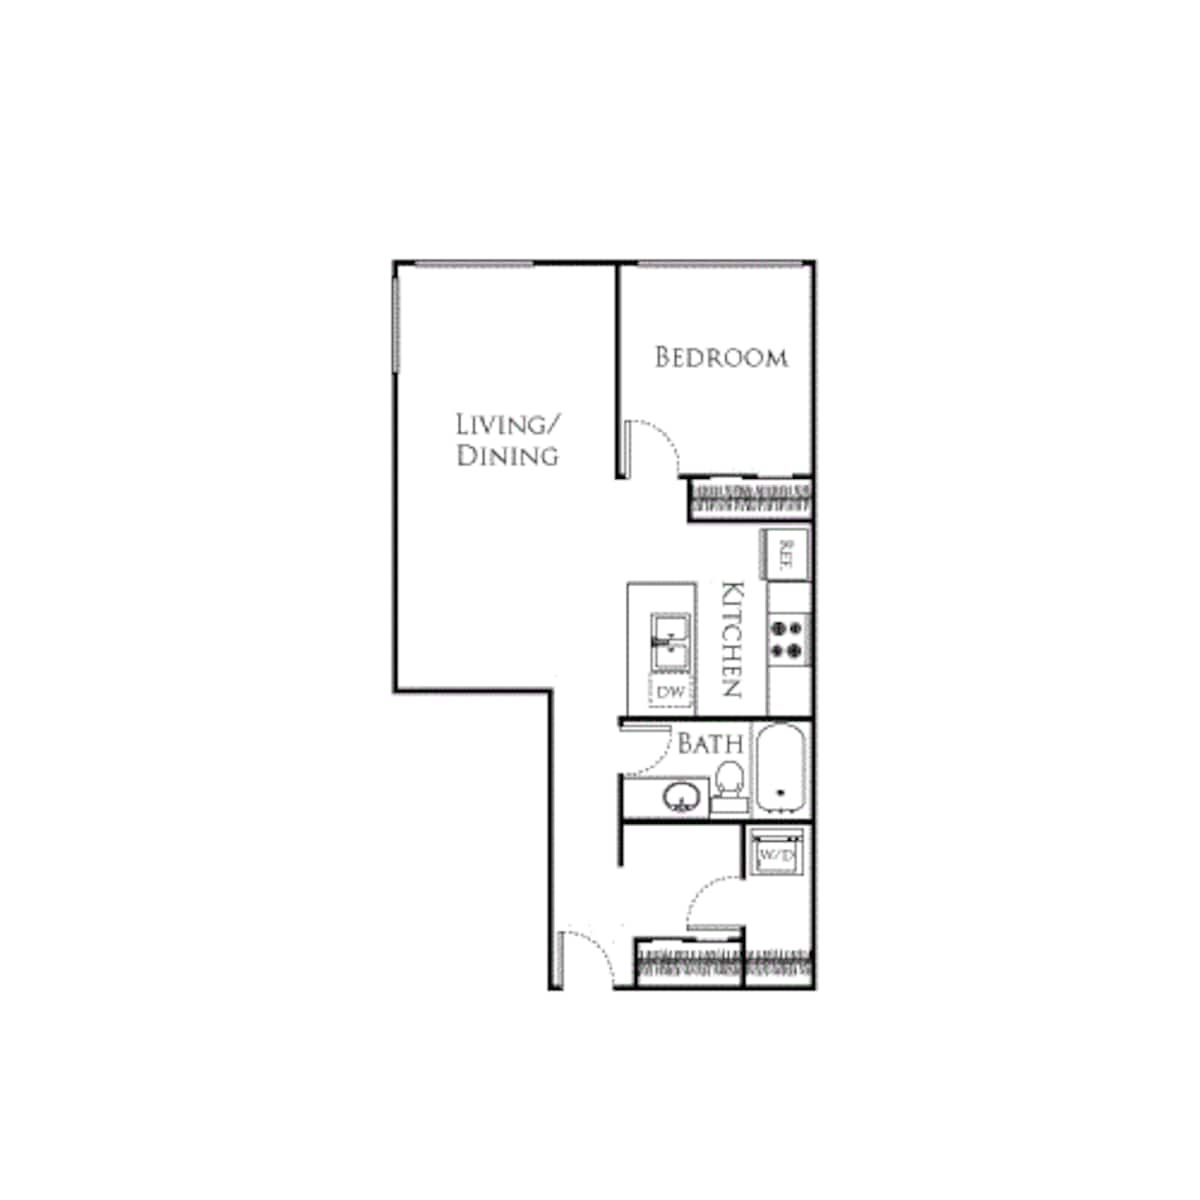 Floorplan diagram for A21, showing 1 bedroom